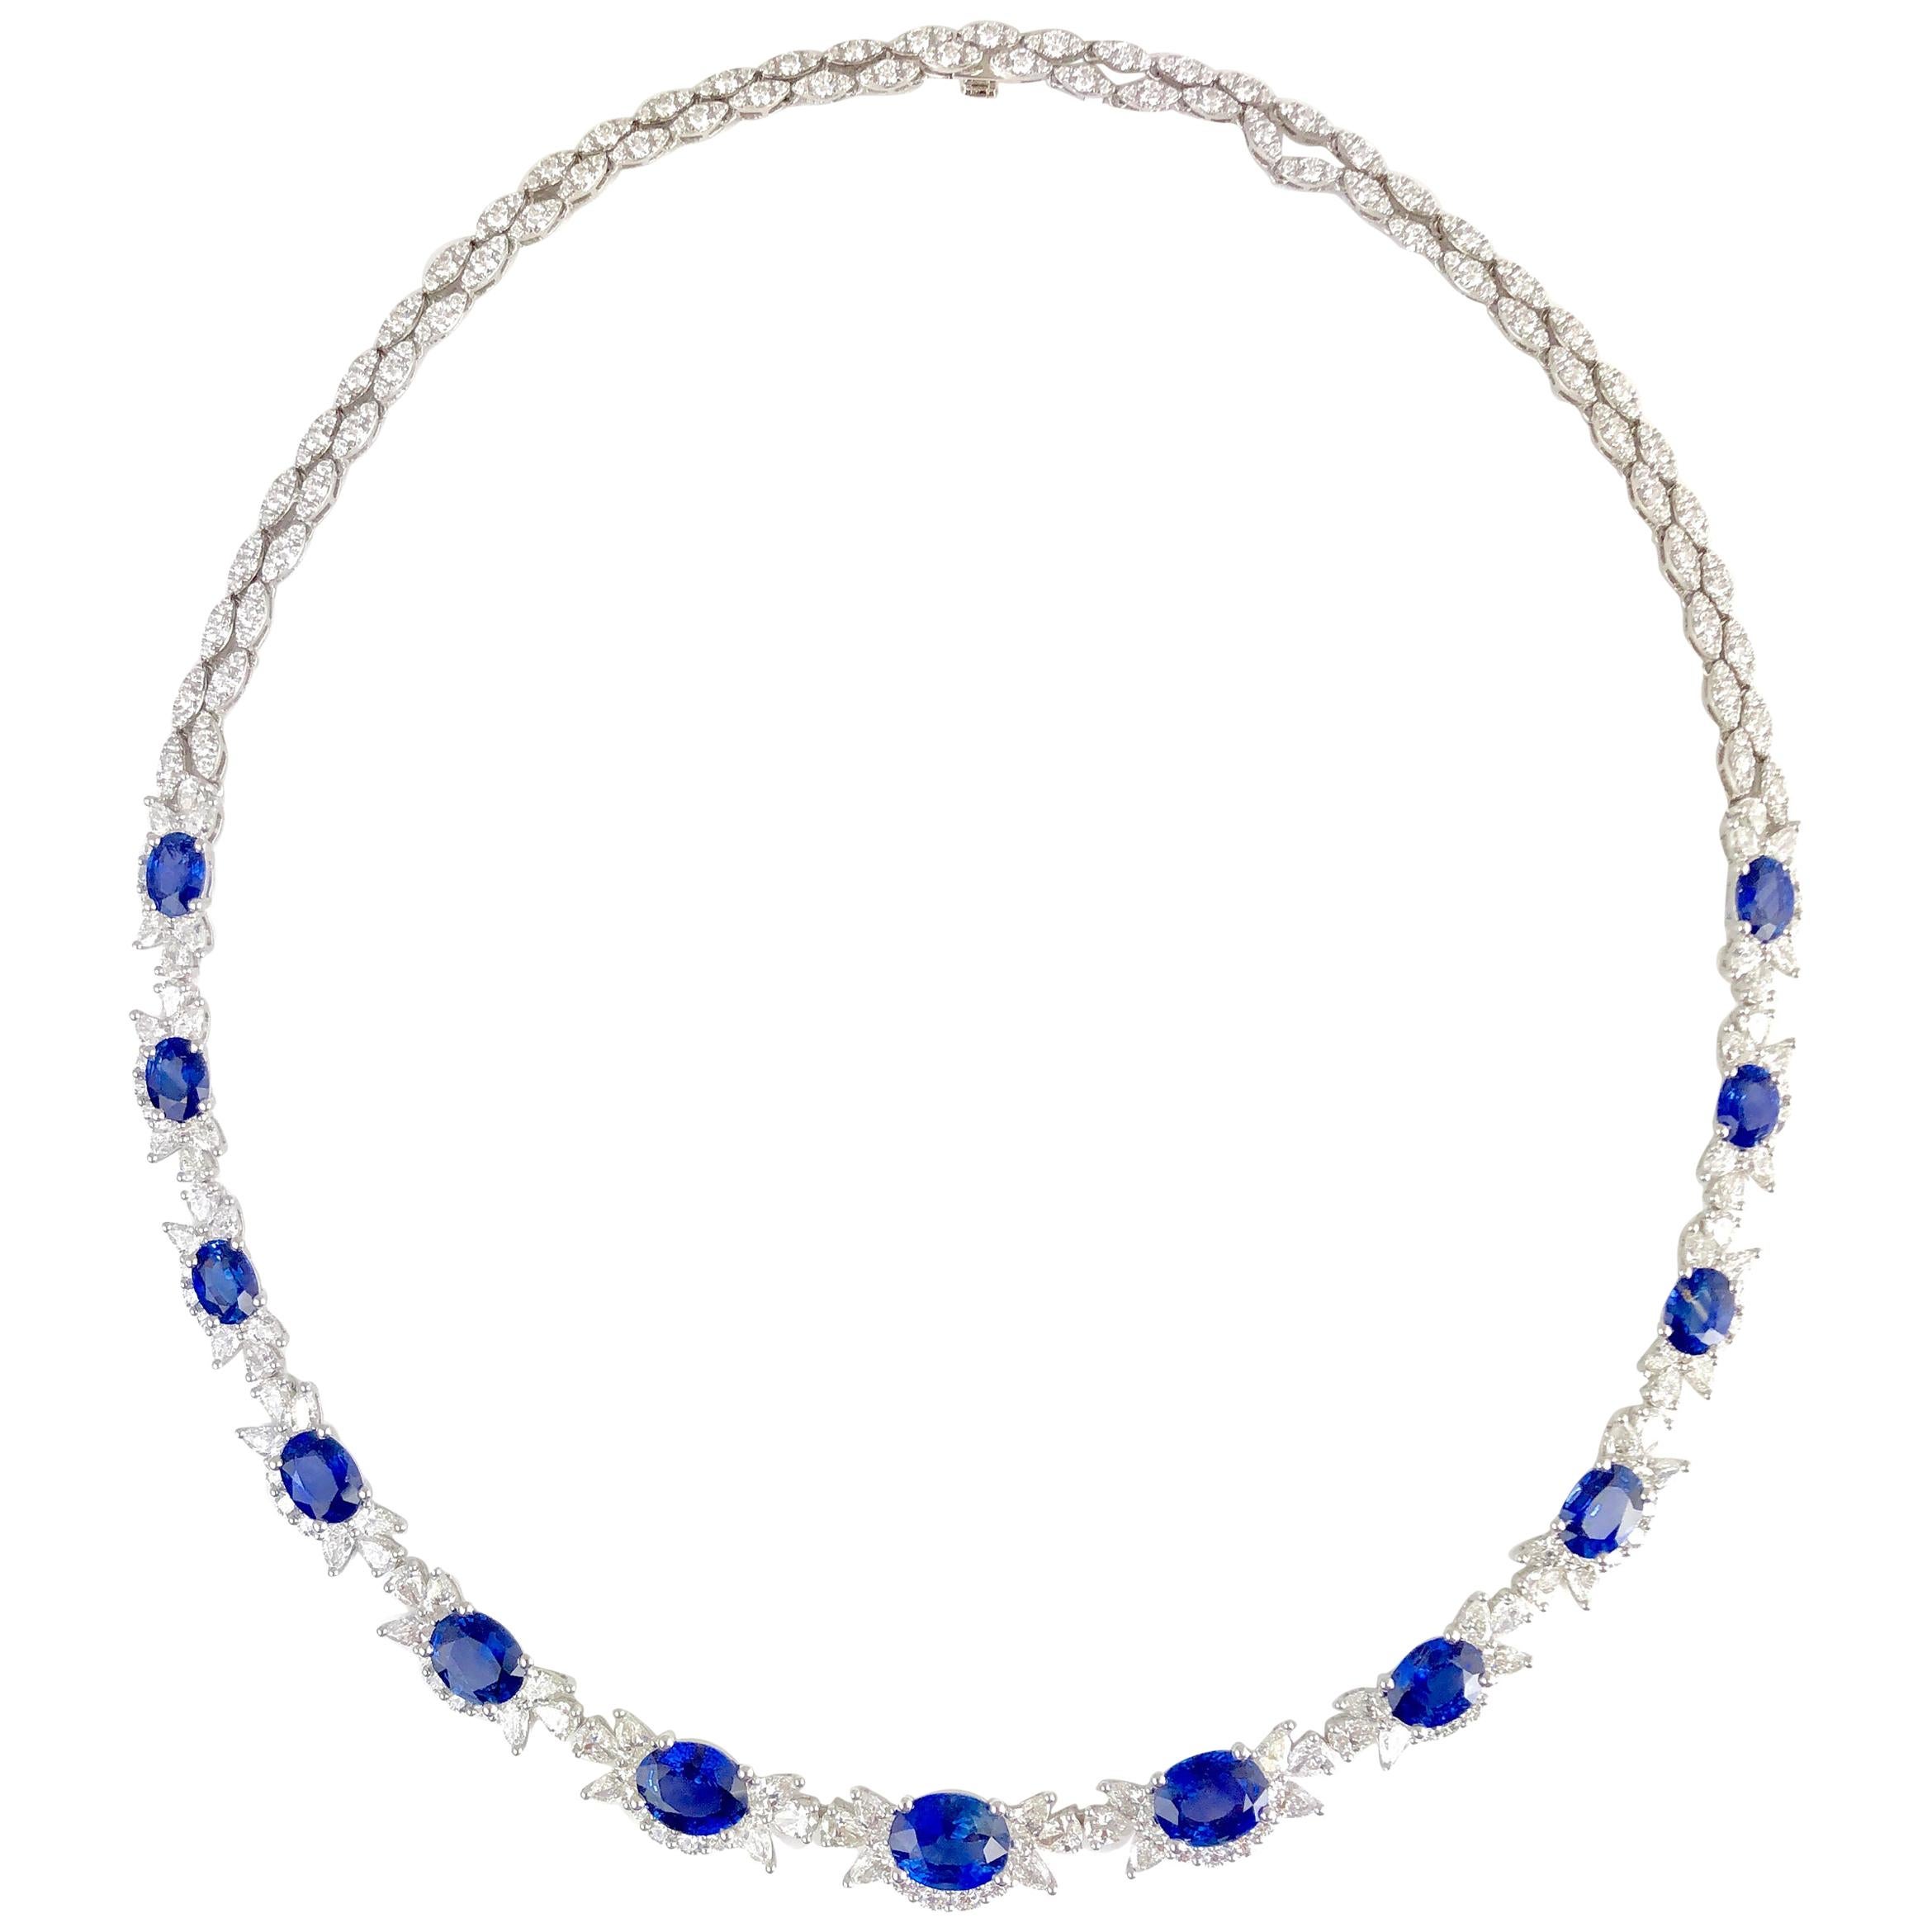 DiamondTown 19.36 Carat Oval Cut Blue Sapphire and Diamond Necklace